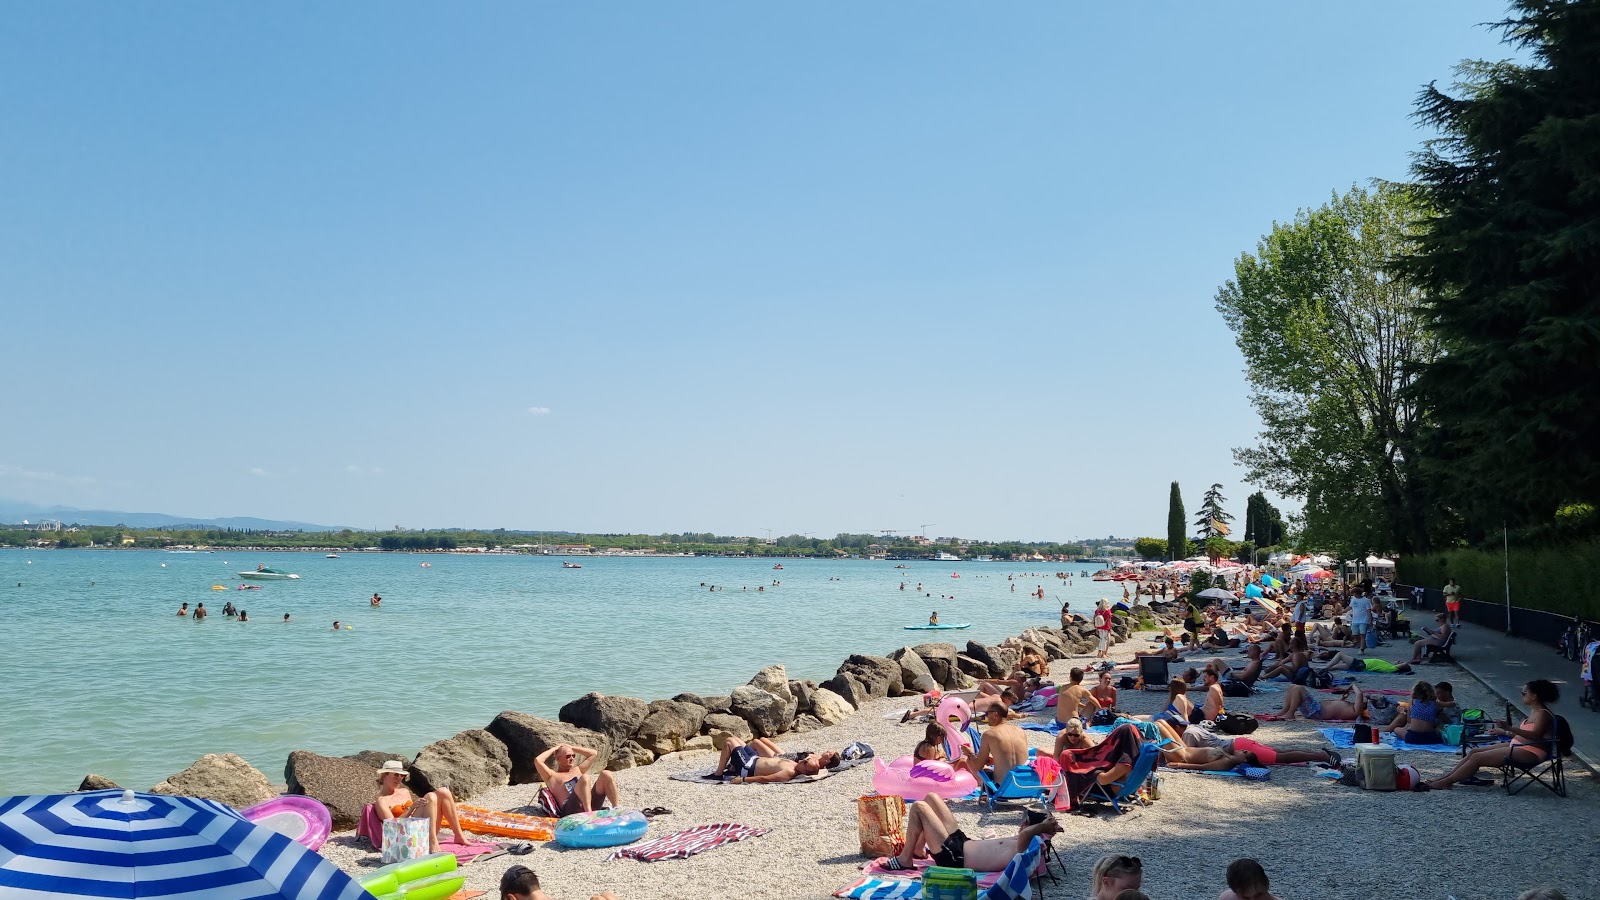 Foto de Spiaggia Dei Capuccini - lugar popular entre os apreciadores de relaxamento